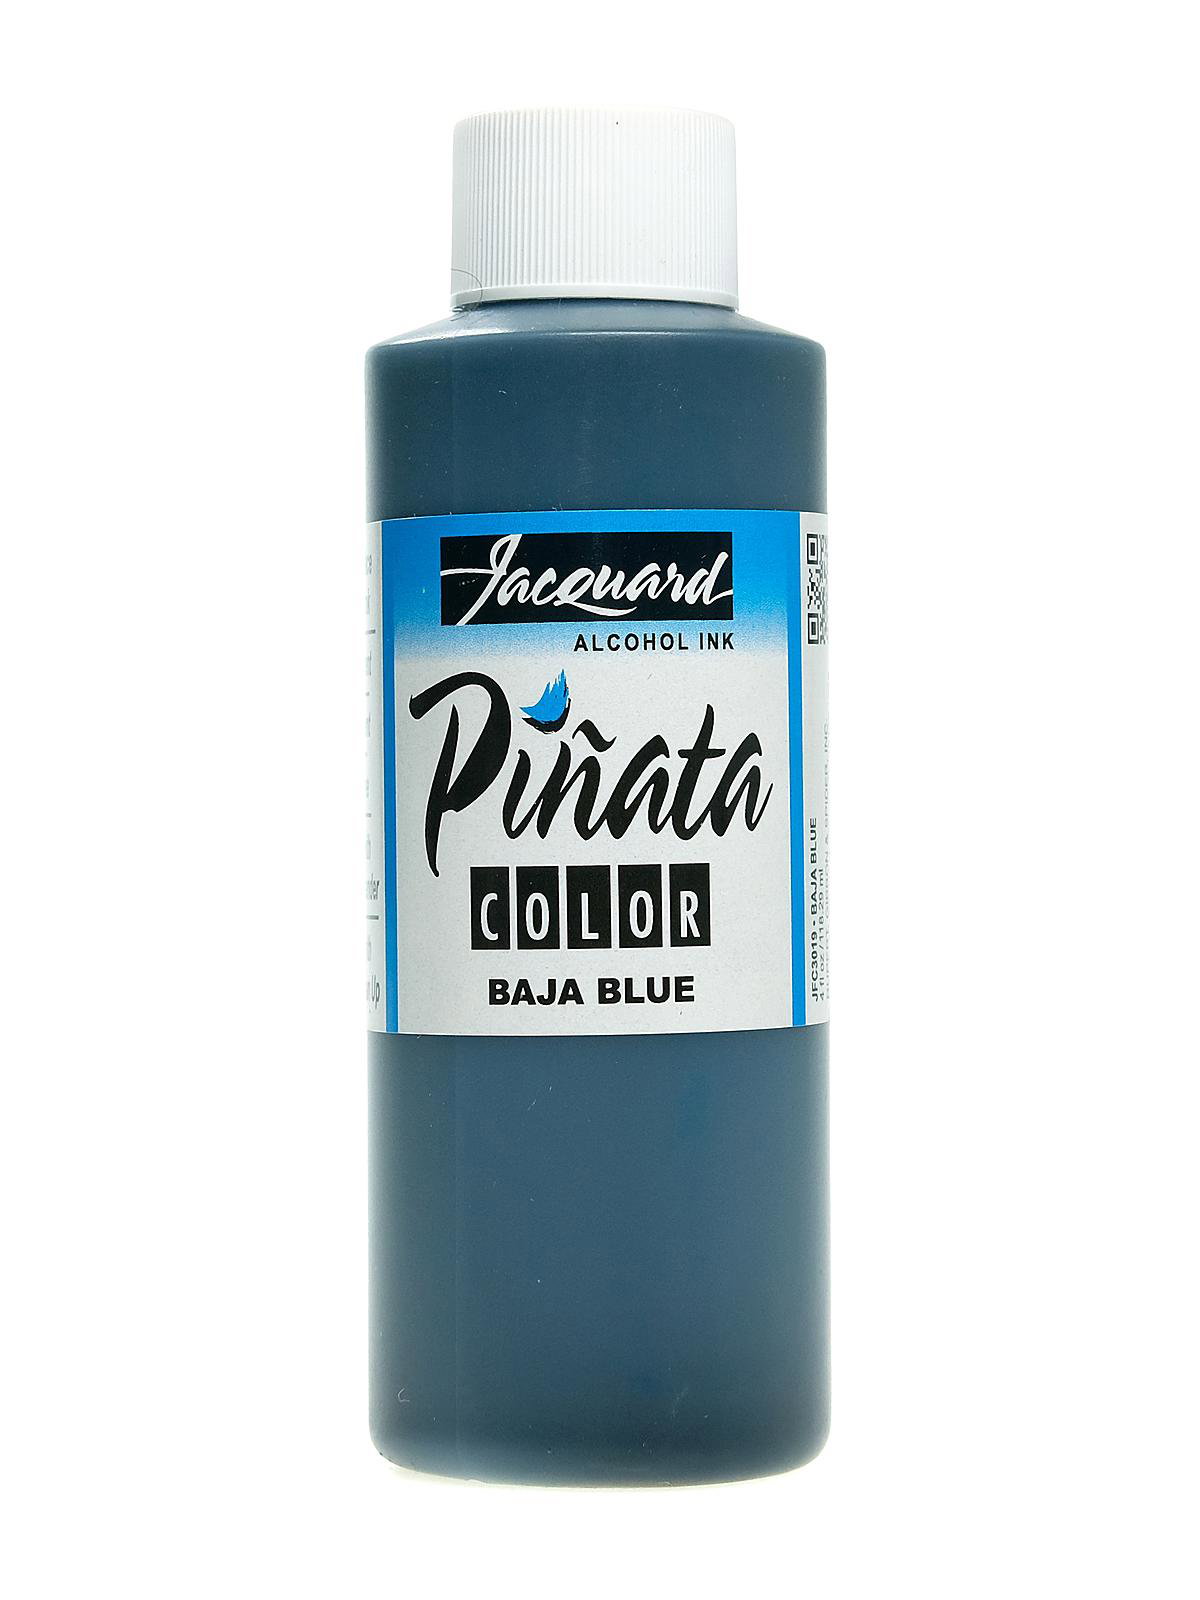 Piñata Color Alcohol Inks by Jacquard 4 oz